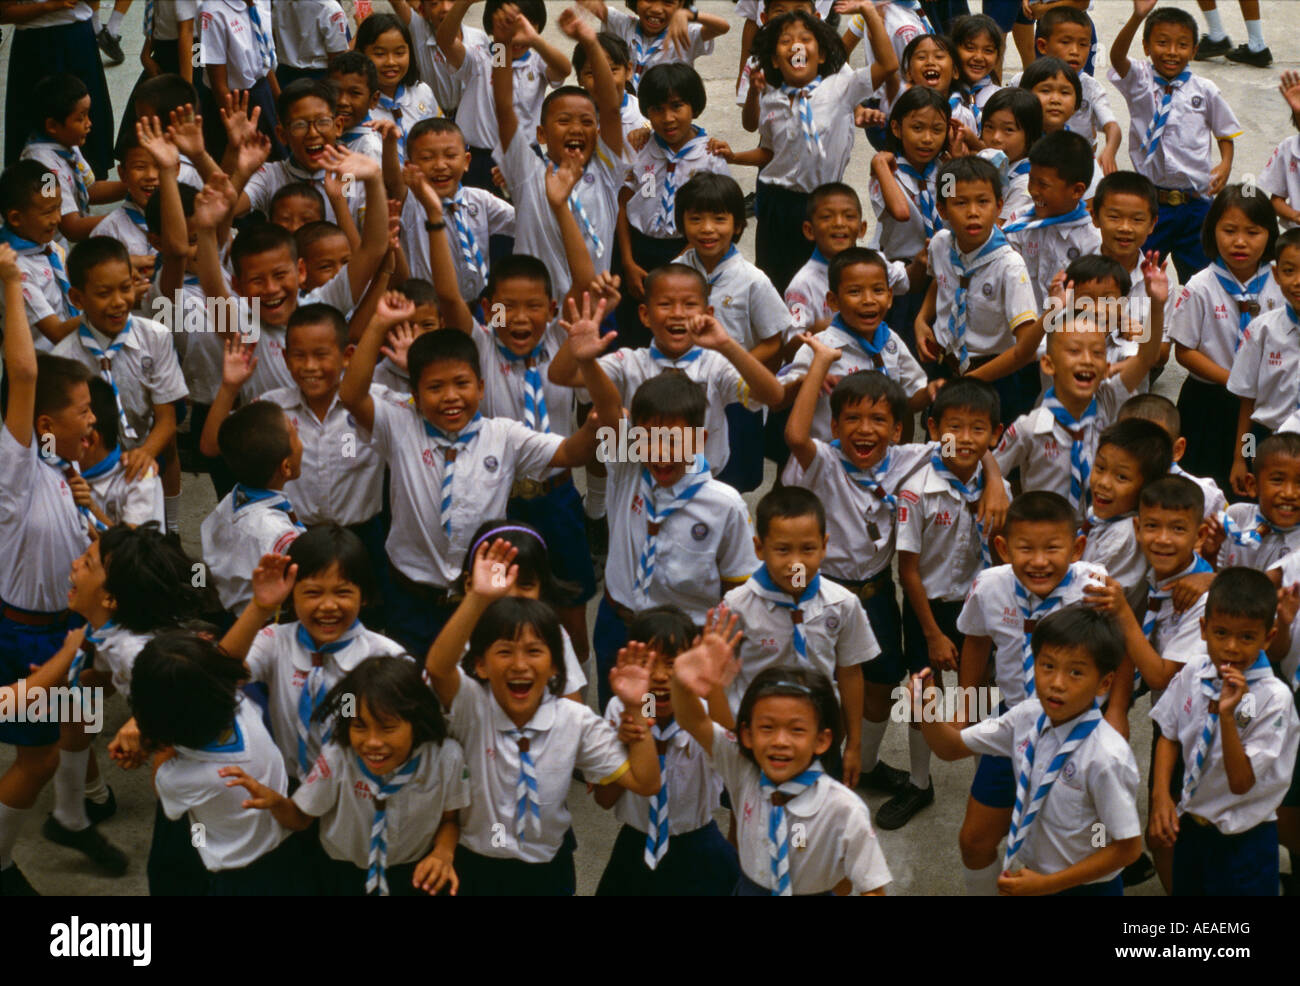 Bangkok school children jumping and smiling at the camera, Thailand. Stock Photo